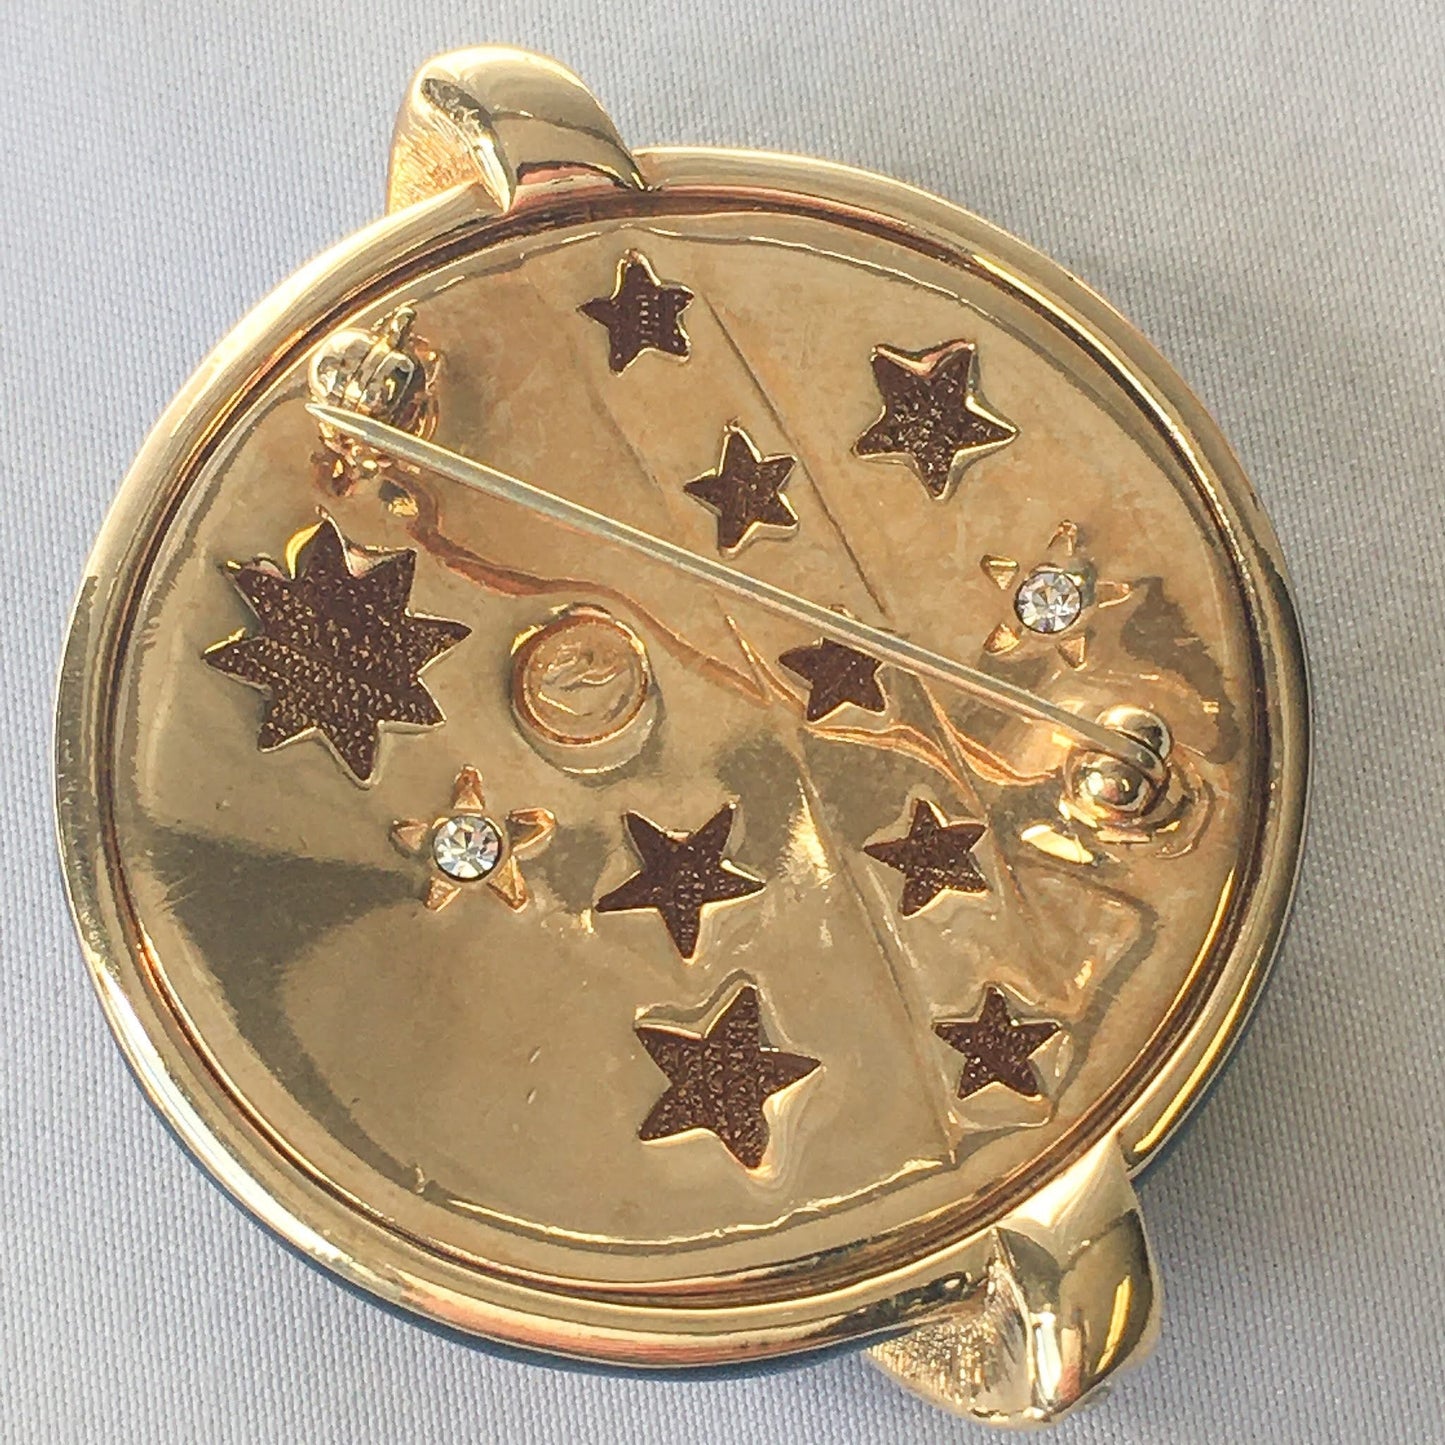 Vintage SWAROVSKI Beautiful Teal and Gold Tone Celestial Swarovski Crystal Brooch, Beautiful Vintage Space Pin